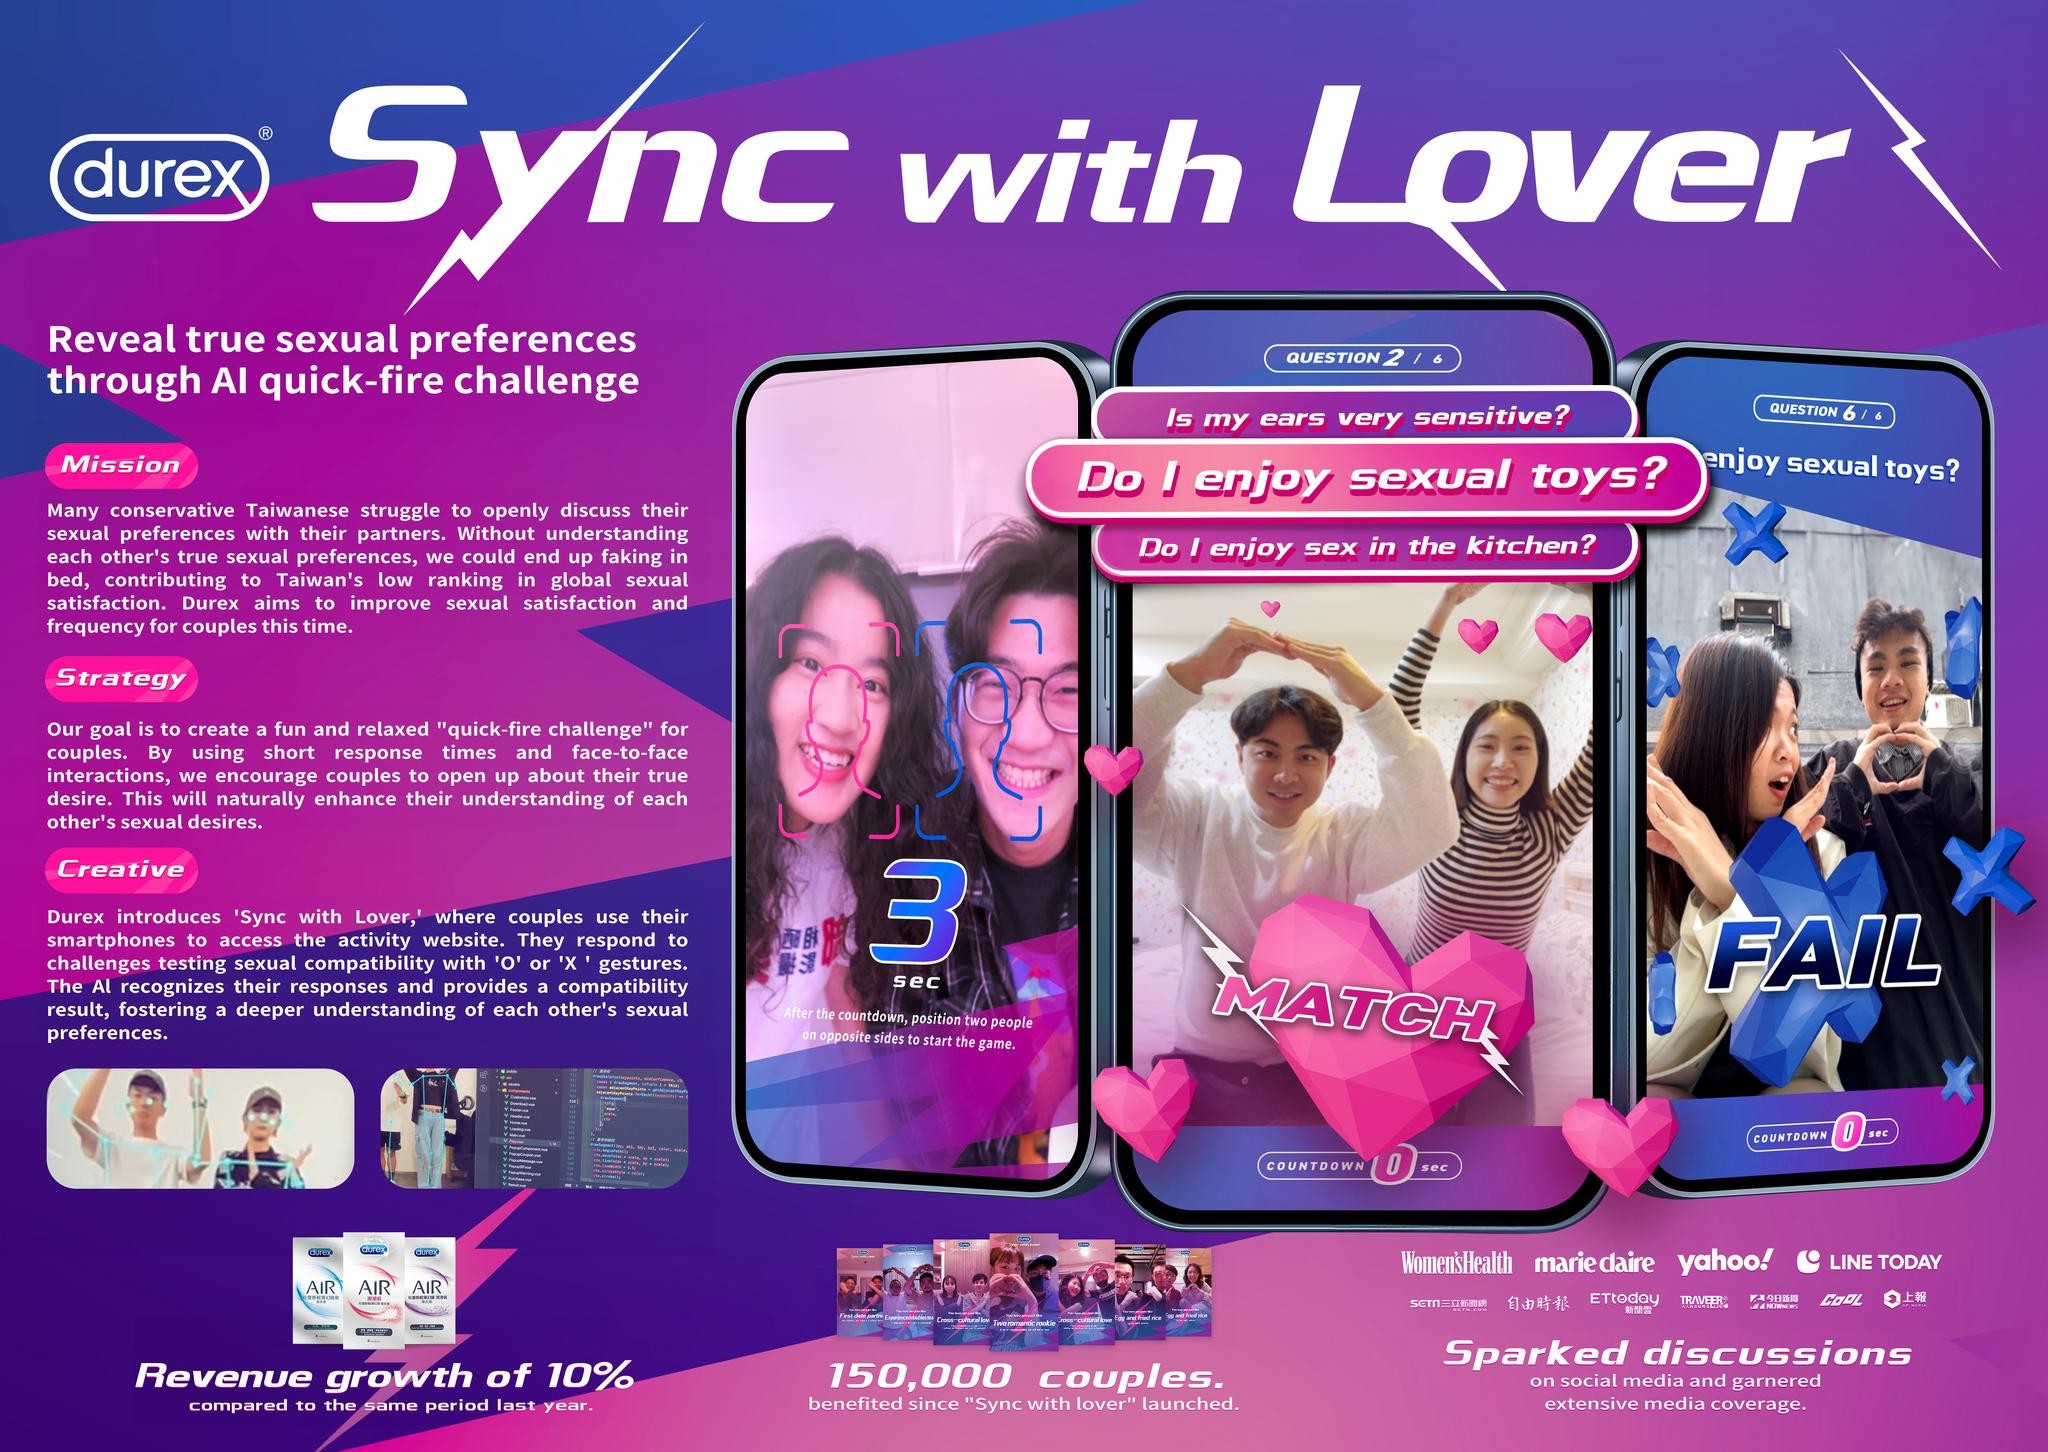 Durex "Sync With Lover"